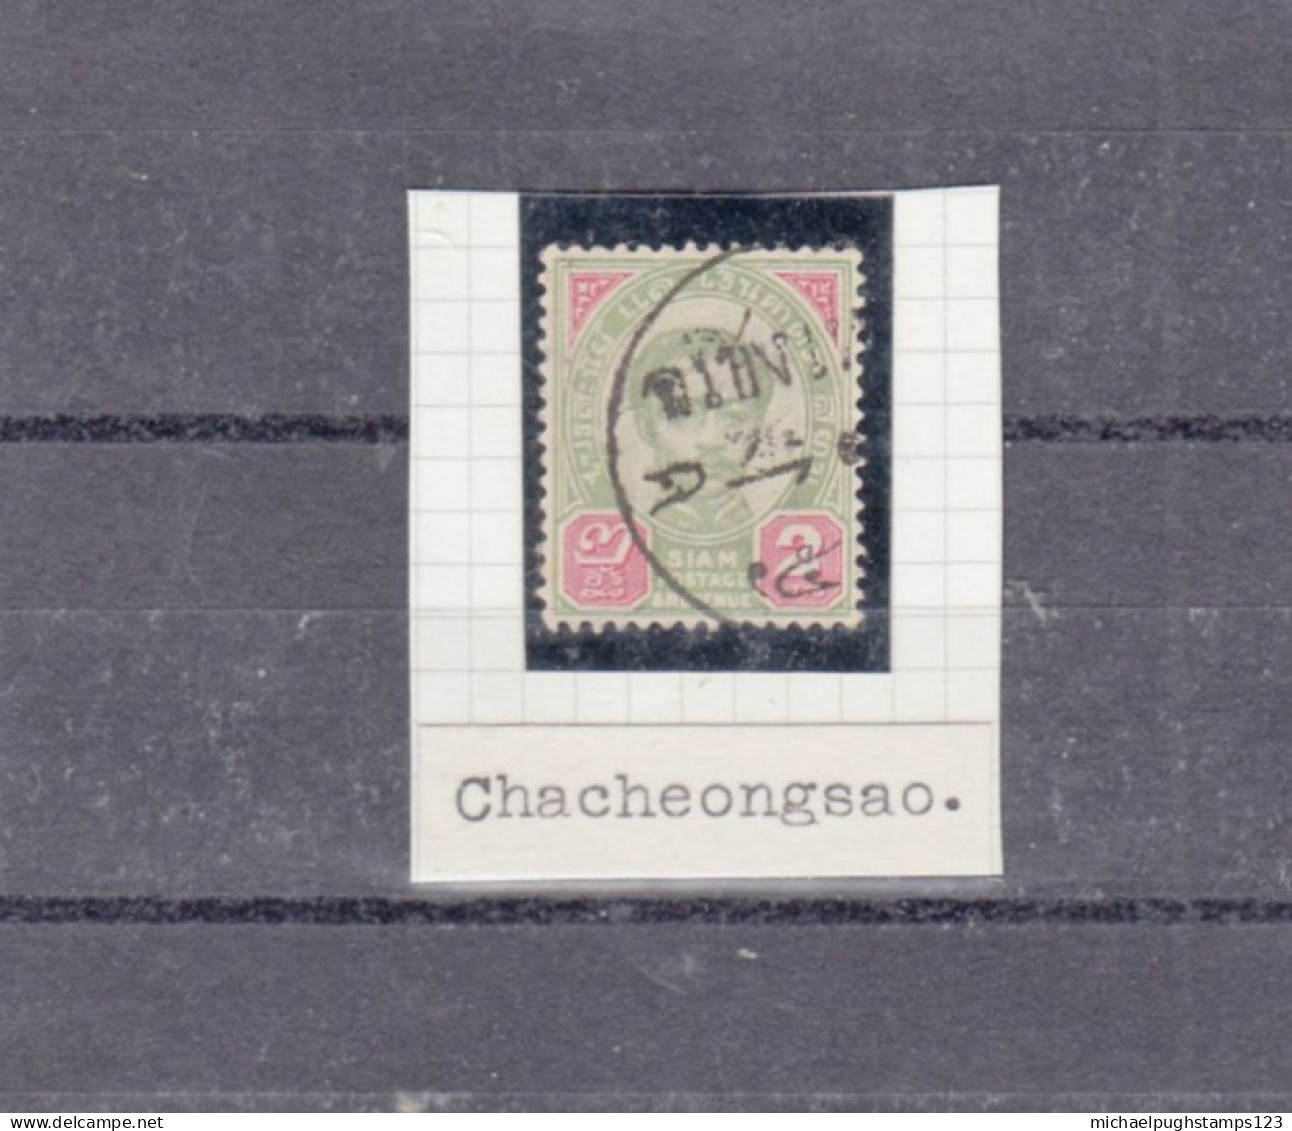 Thailand / Stamps / Chacheongsao Native Postmarks - Thaïlande